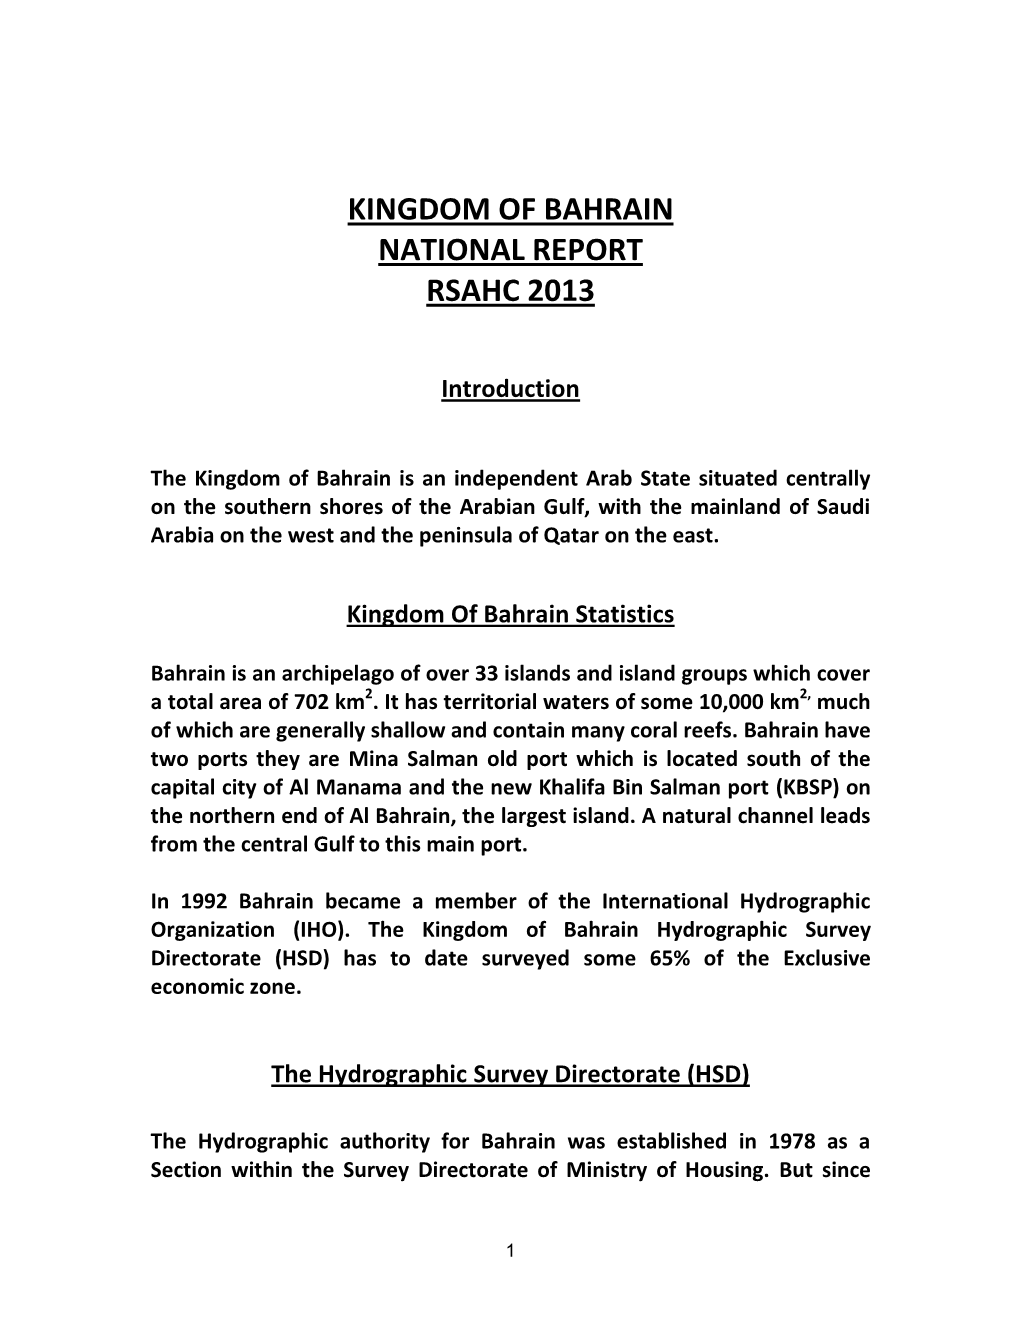 Kingdom of Bahrain National Report Rsahc 2013